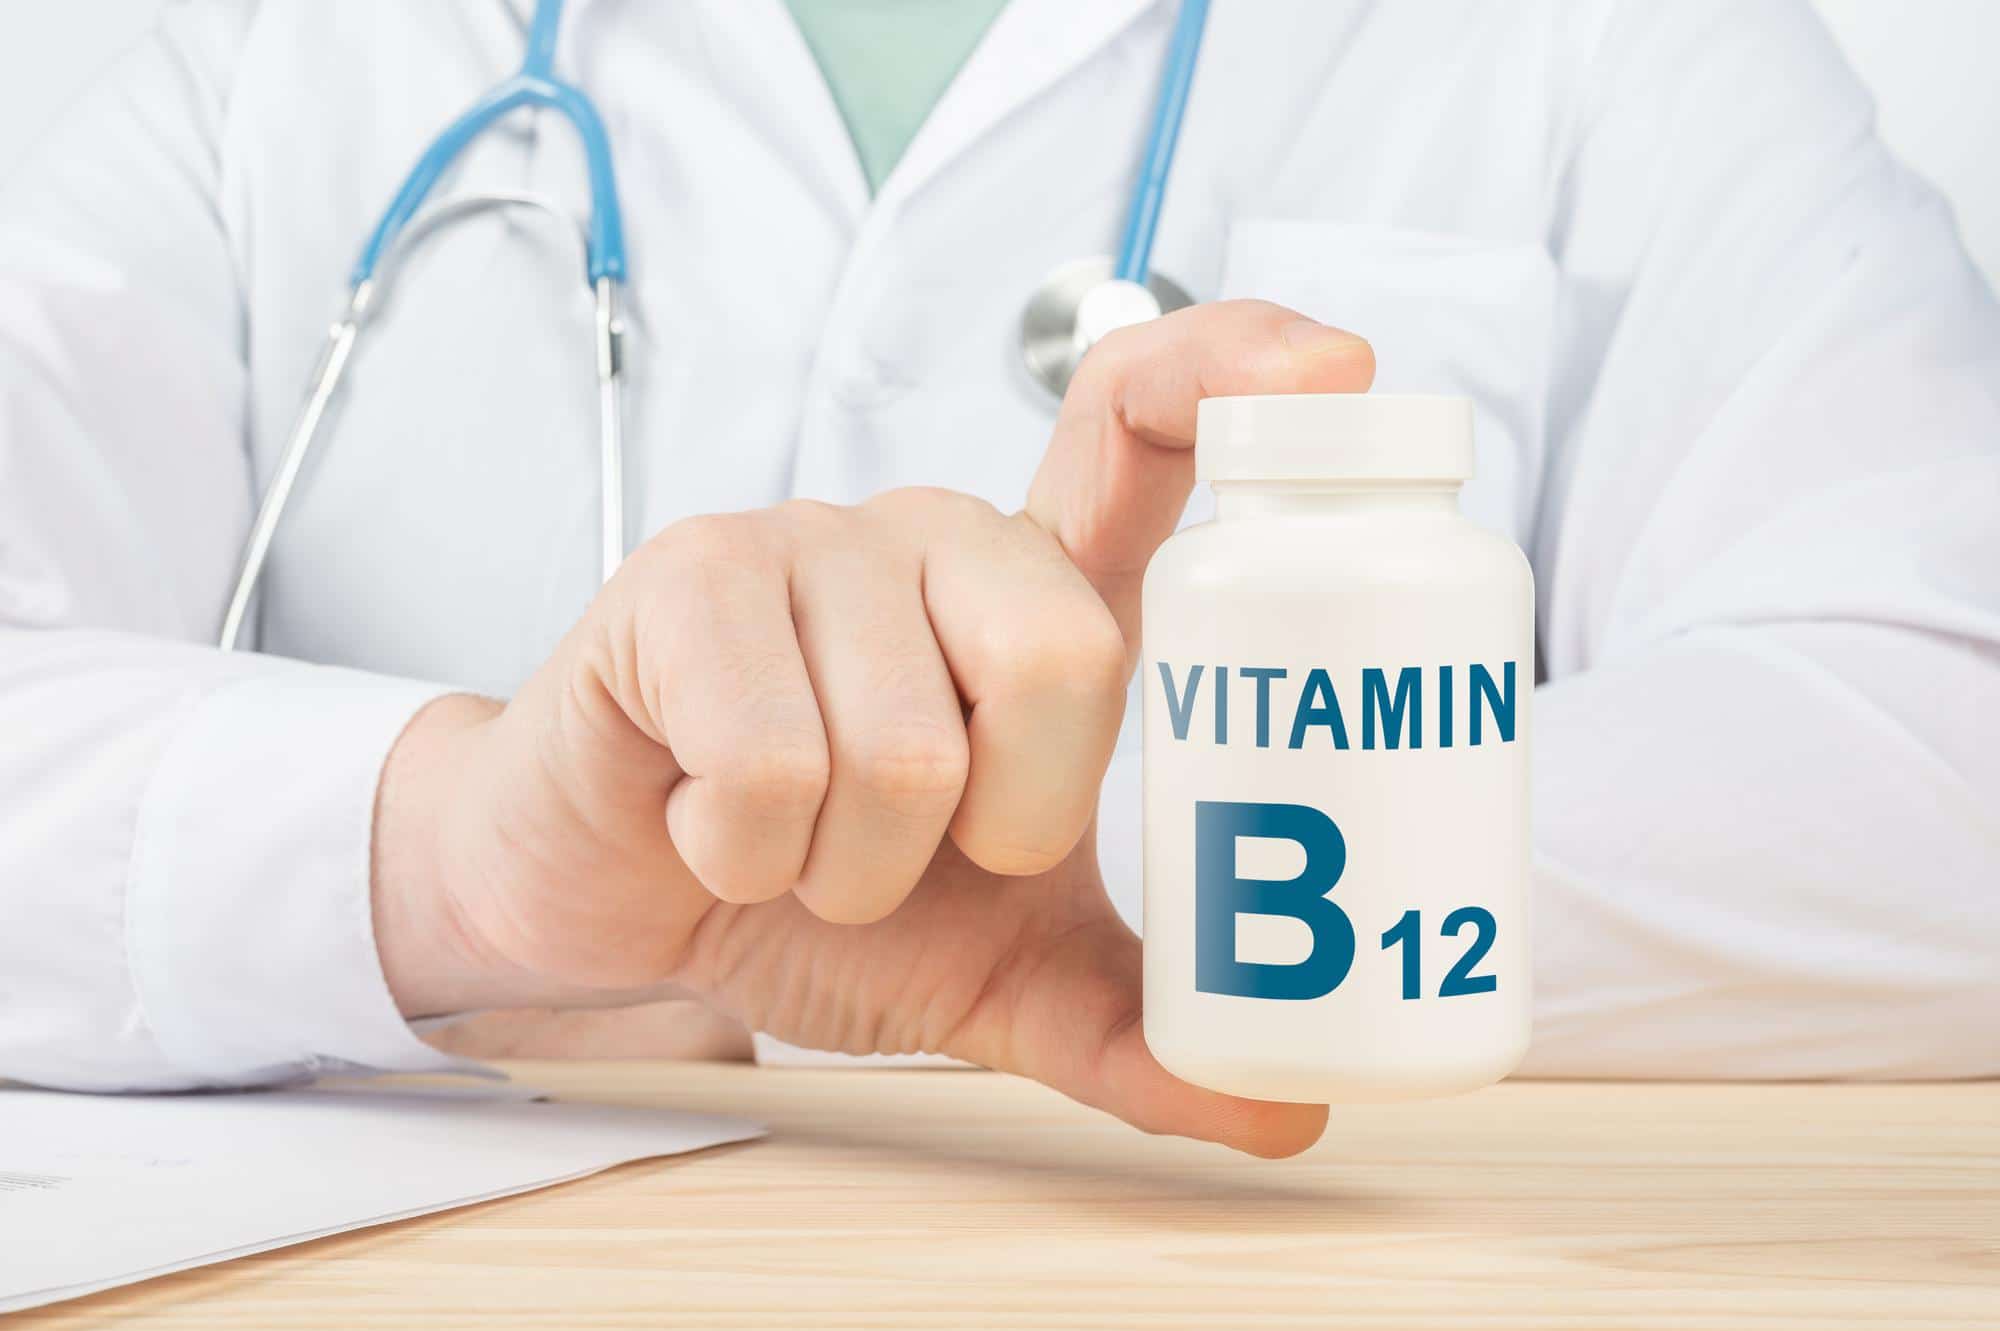 Vitamin B12 and its benefits